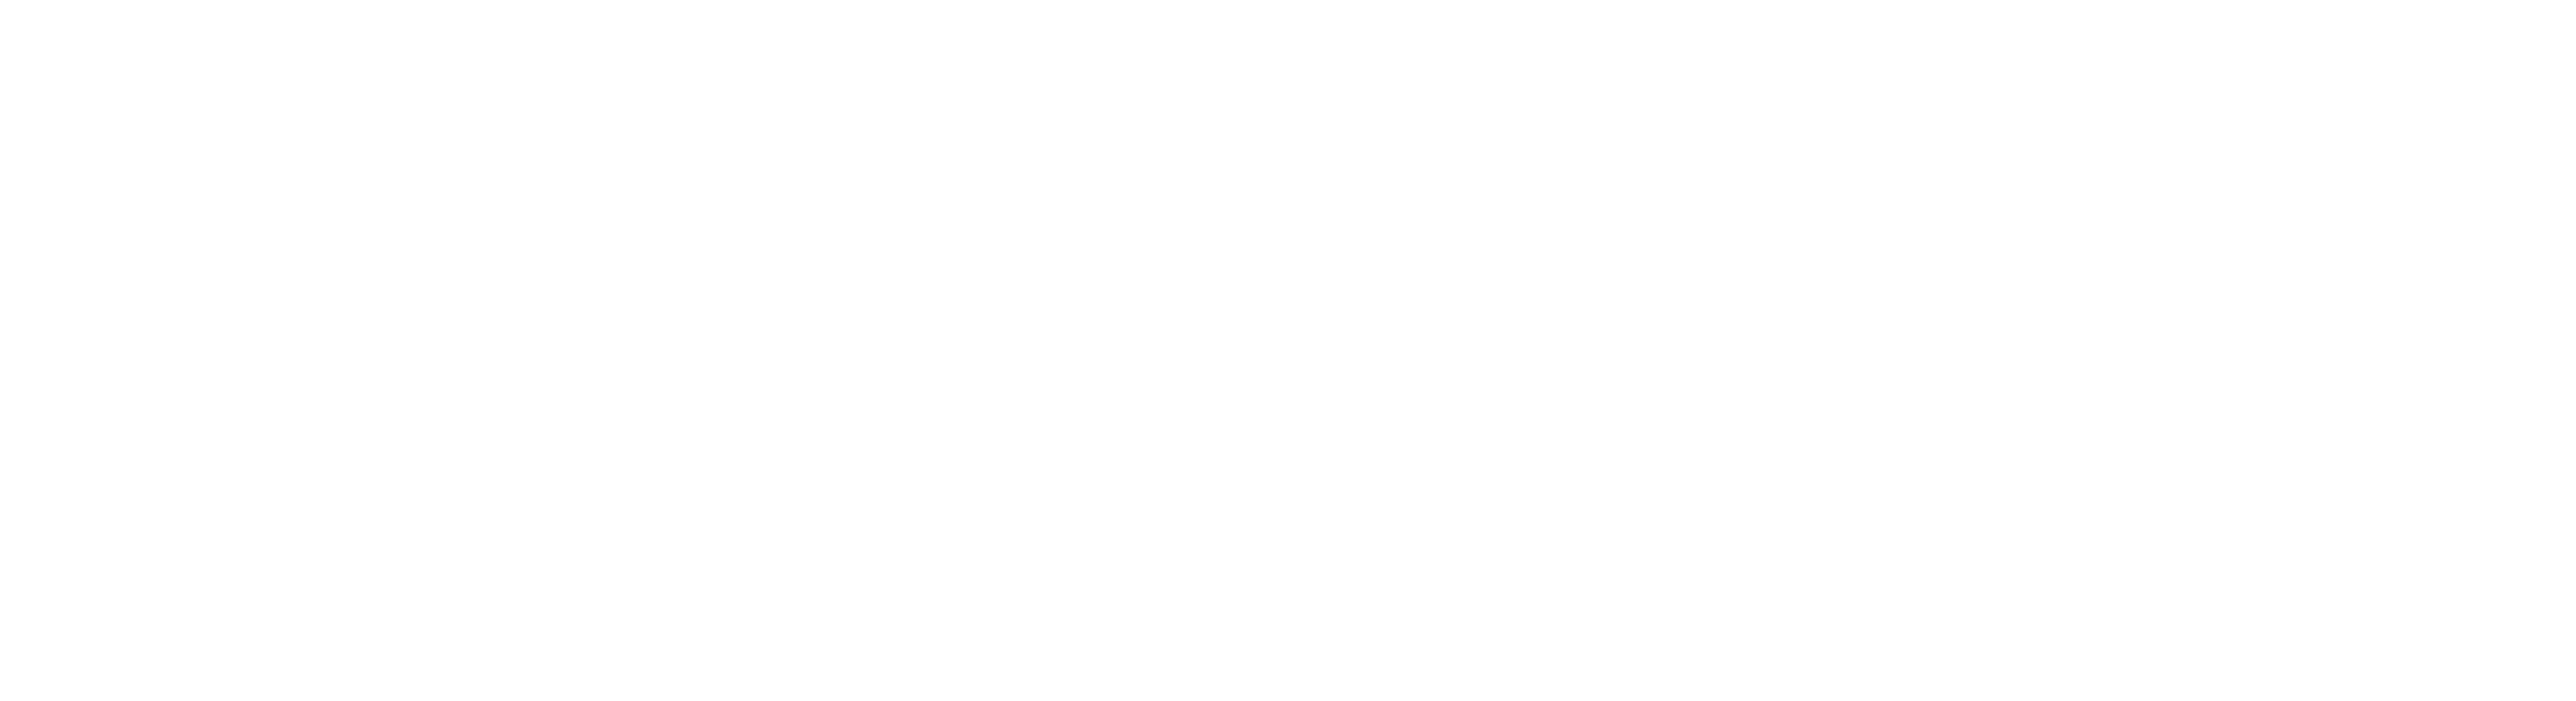 USA today 10 best logo